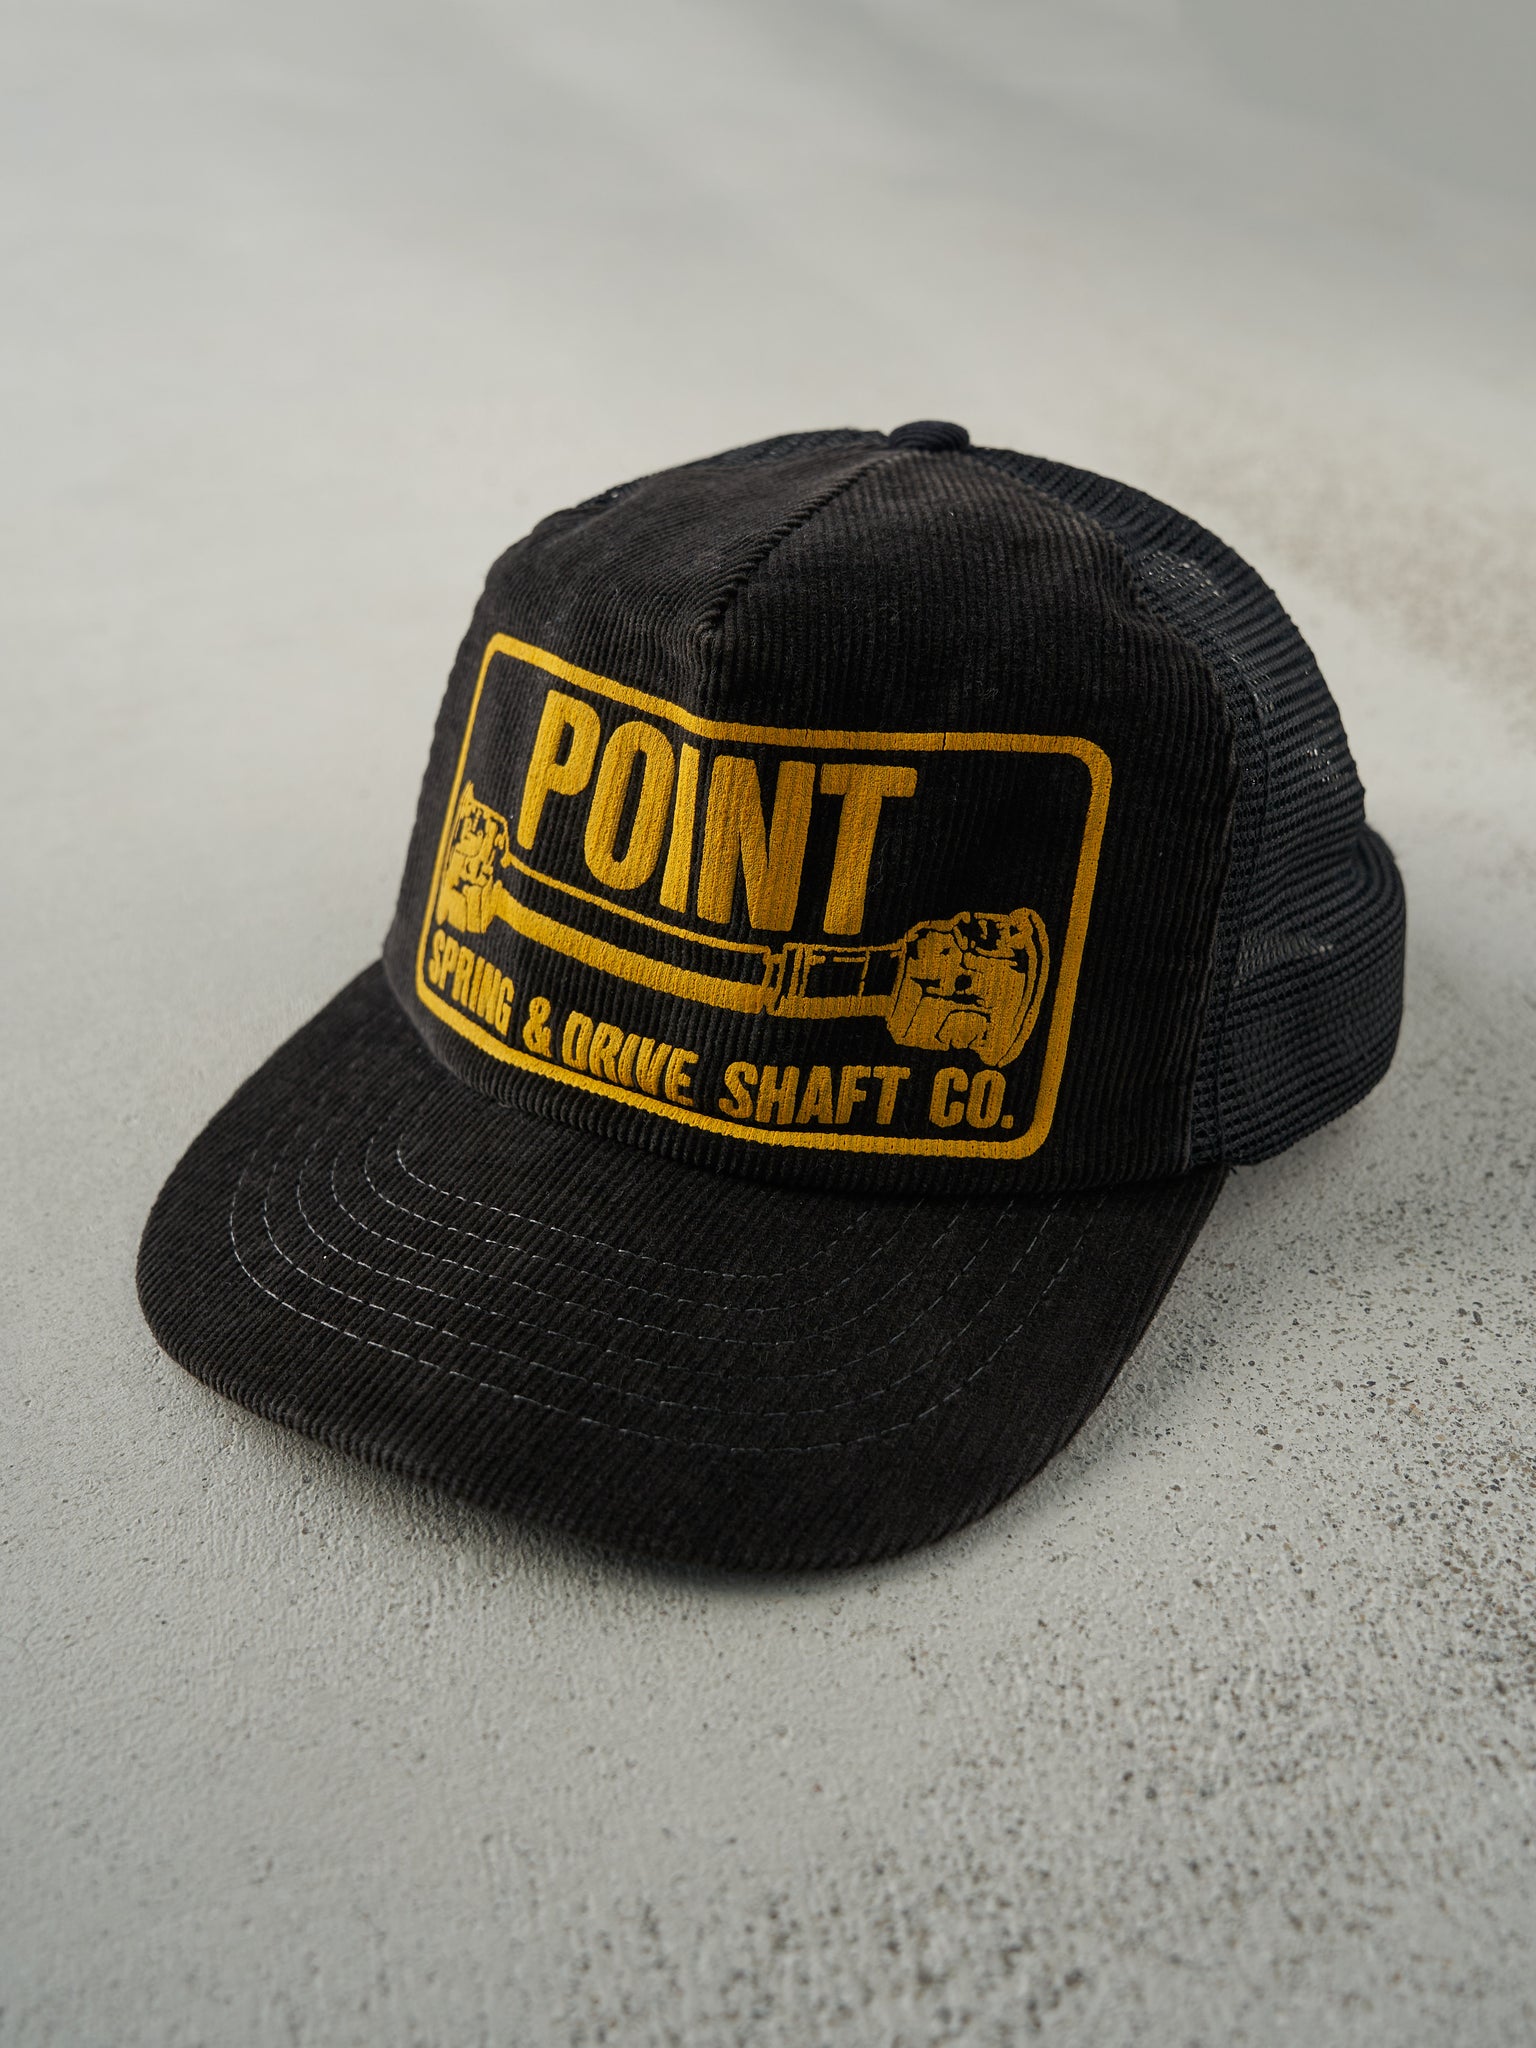 Vintage 80s Black Point Spring & Drive Shaft Co. Corduroy Trucker Hat